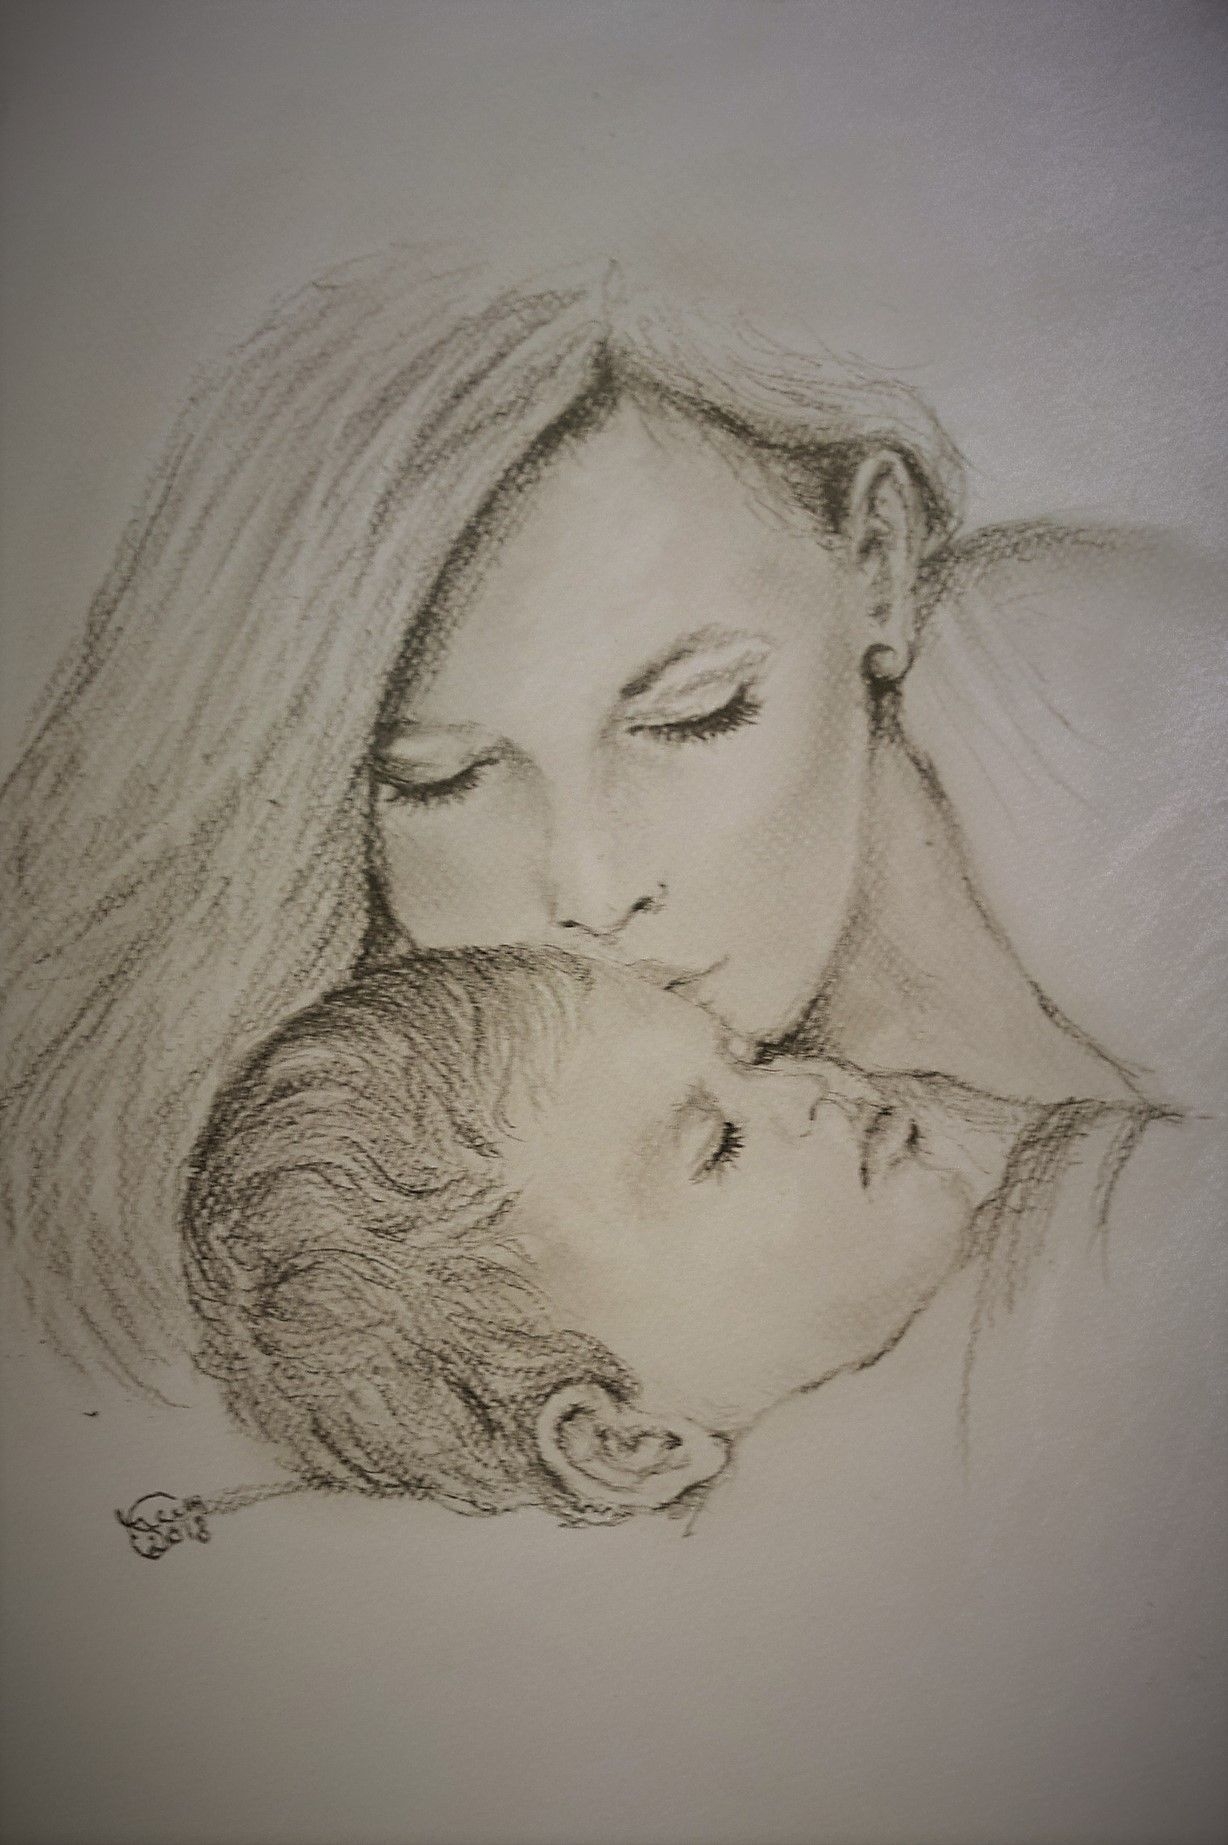 Рисунок мама карандашом красиво. Рисунок ко Дню матери. Рисунок для мамы. Красивый рисунок для мамы. Рисунок на день матери карандашом.